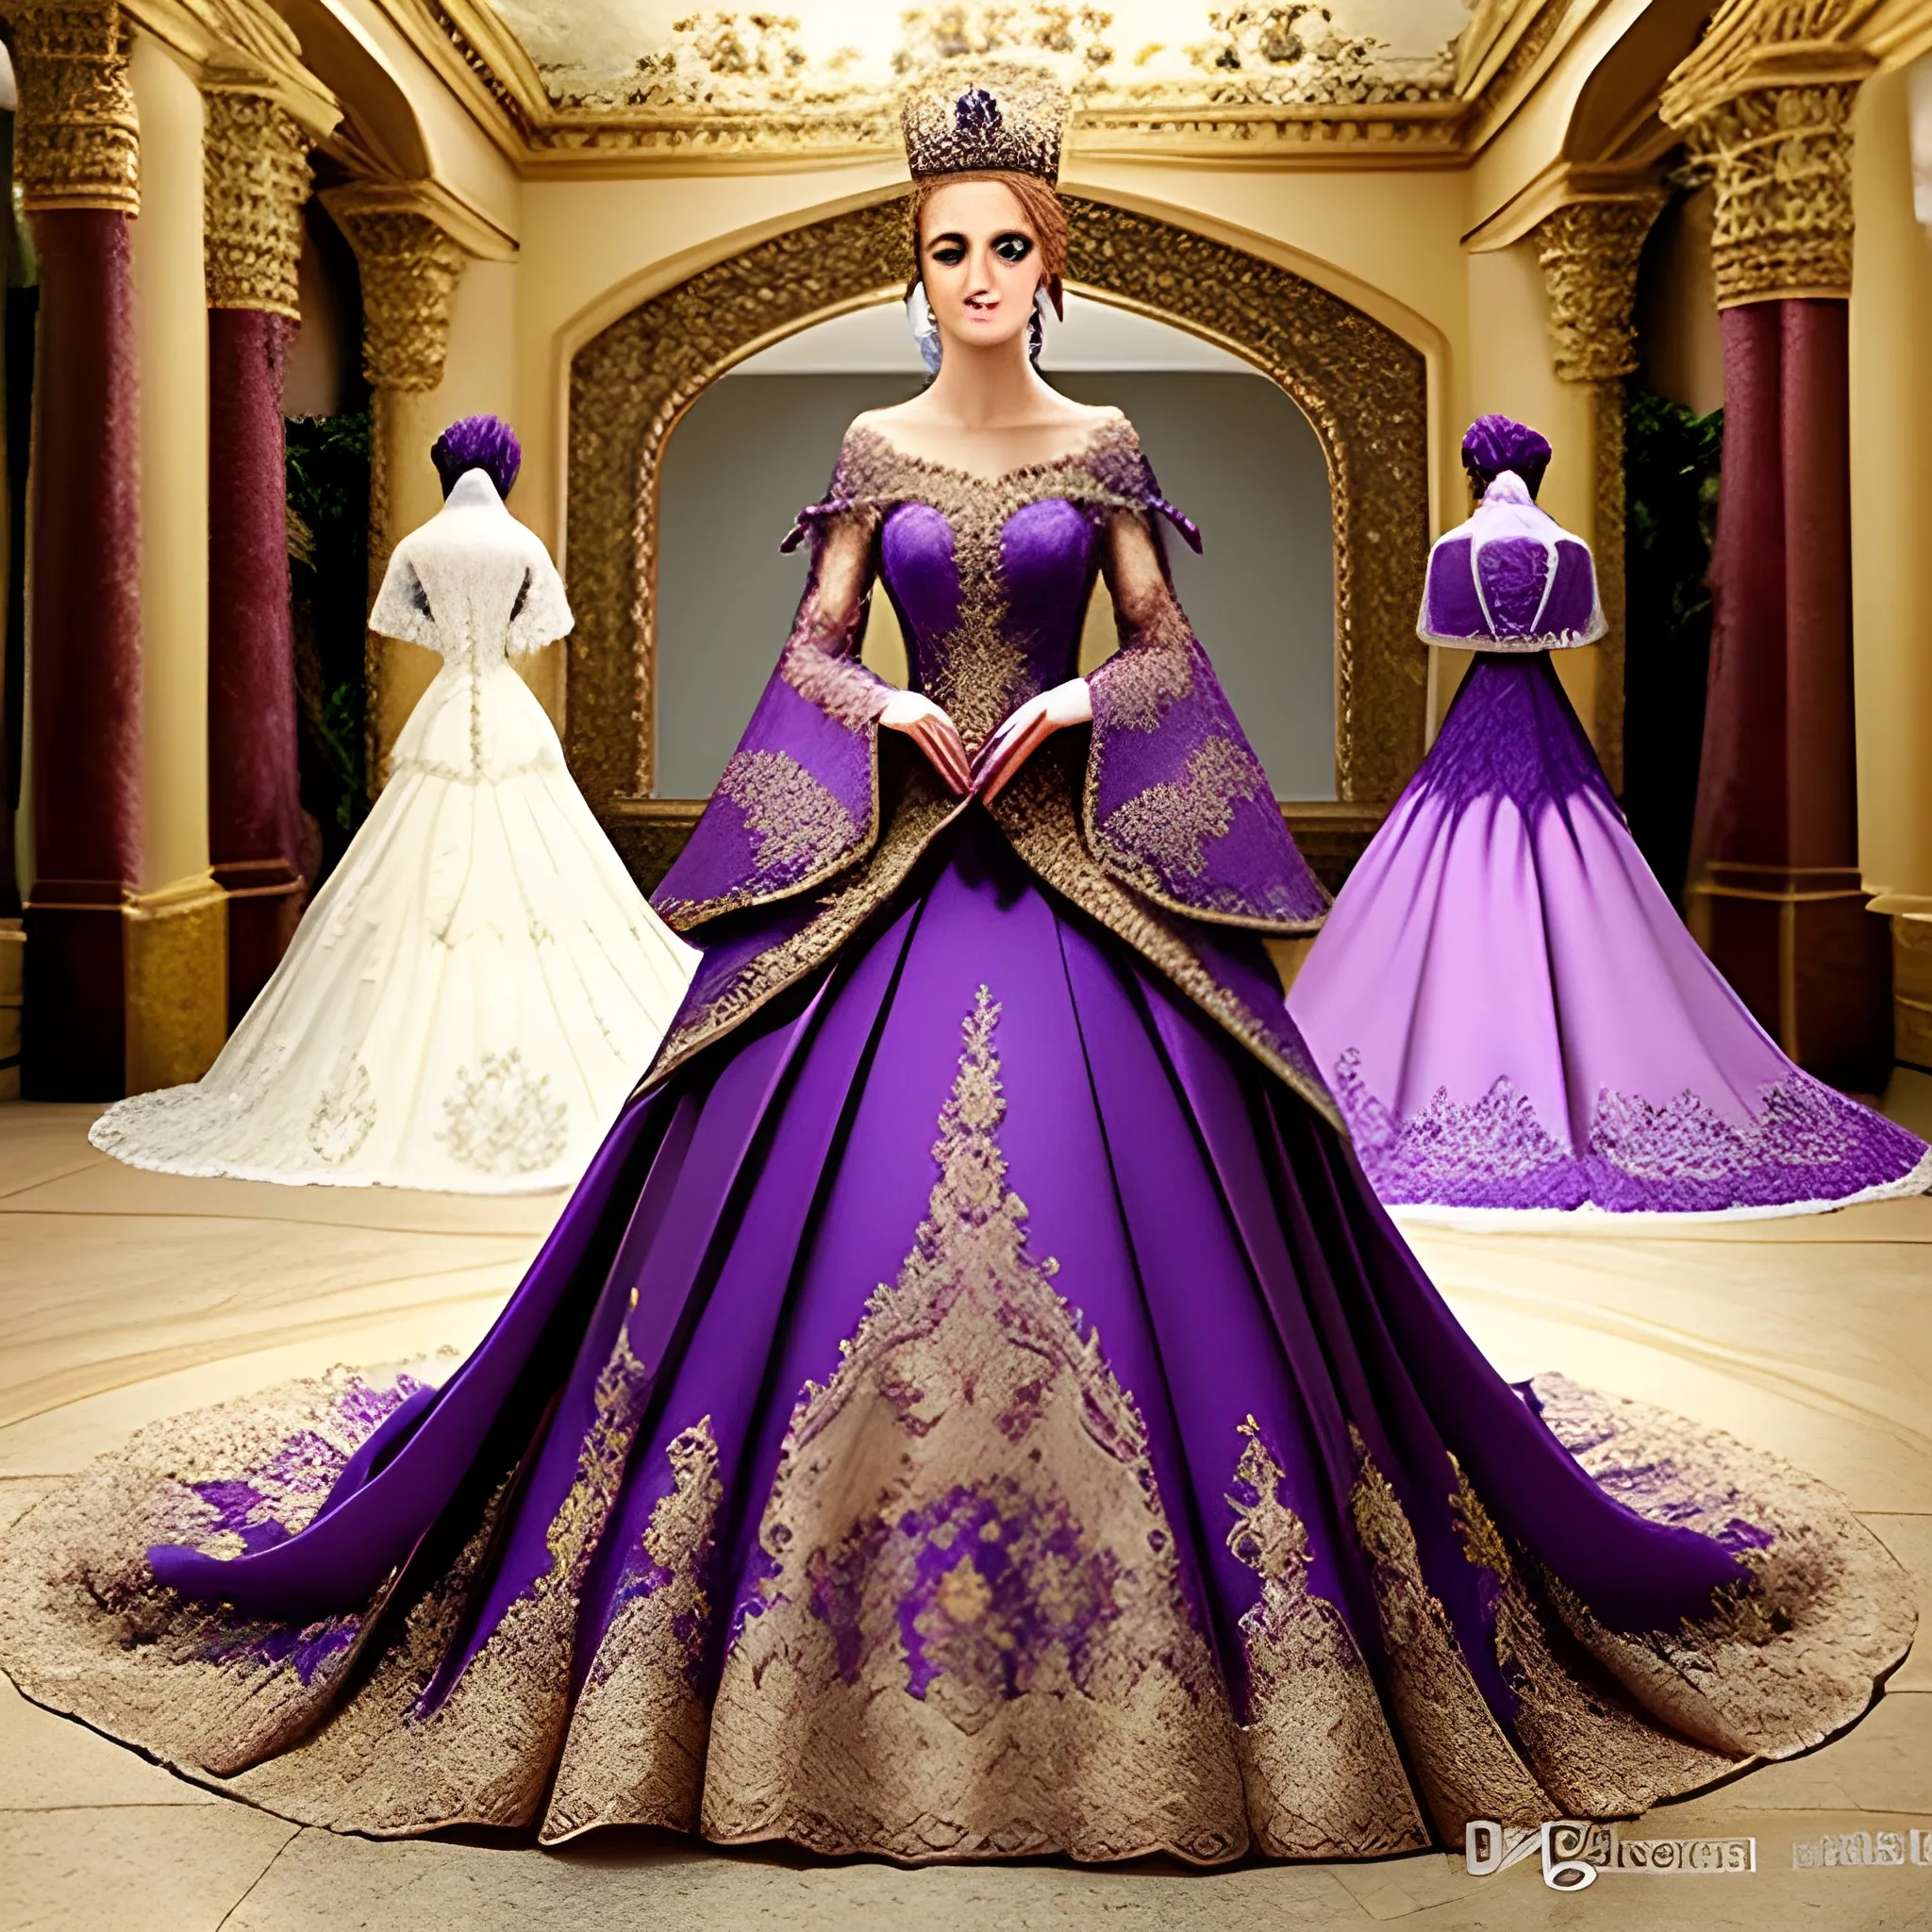 Intricate fantasy wedding gown purple and gold lace goddess trai... -  Arthub.ai